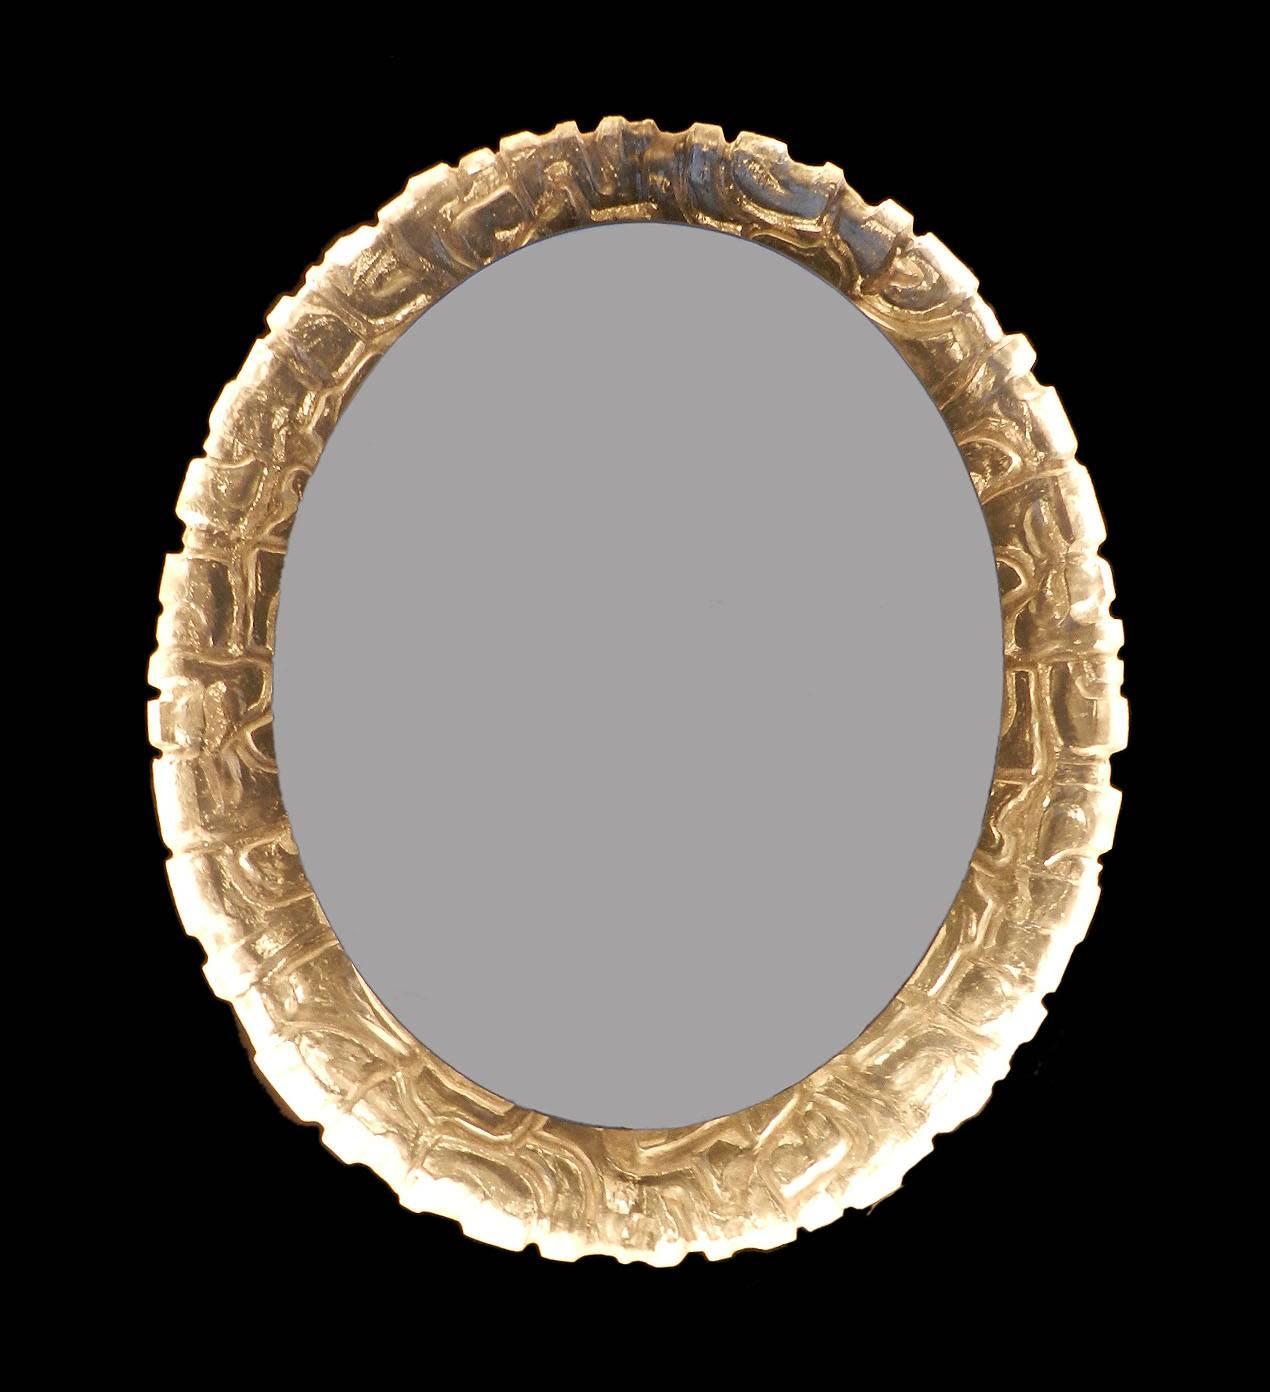 round mirror with light